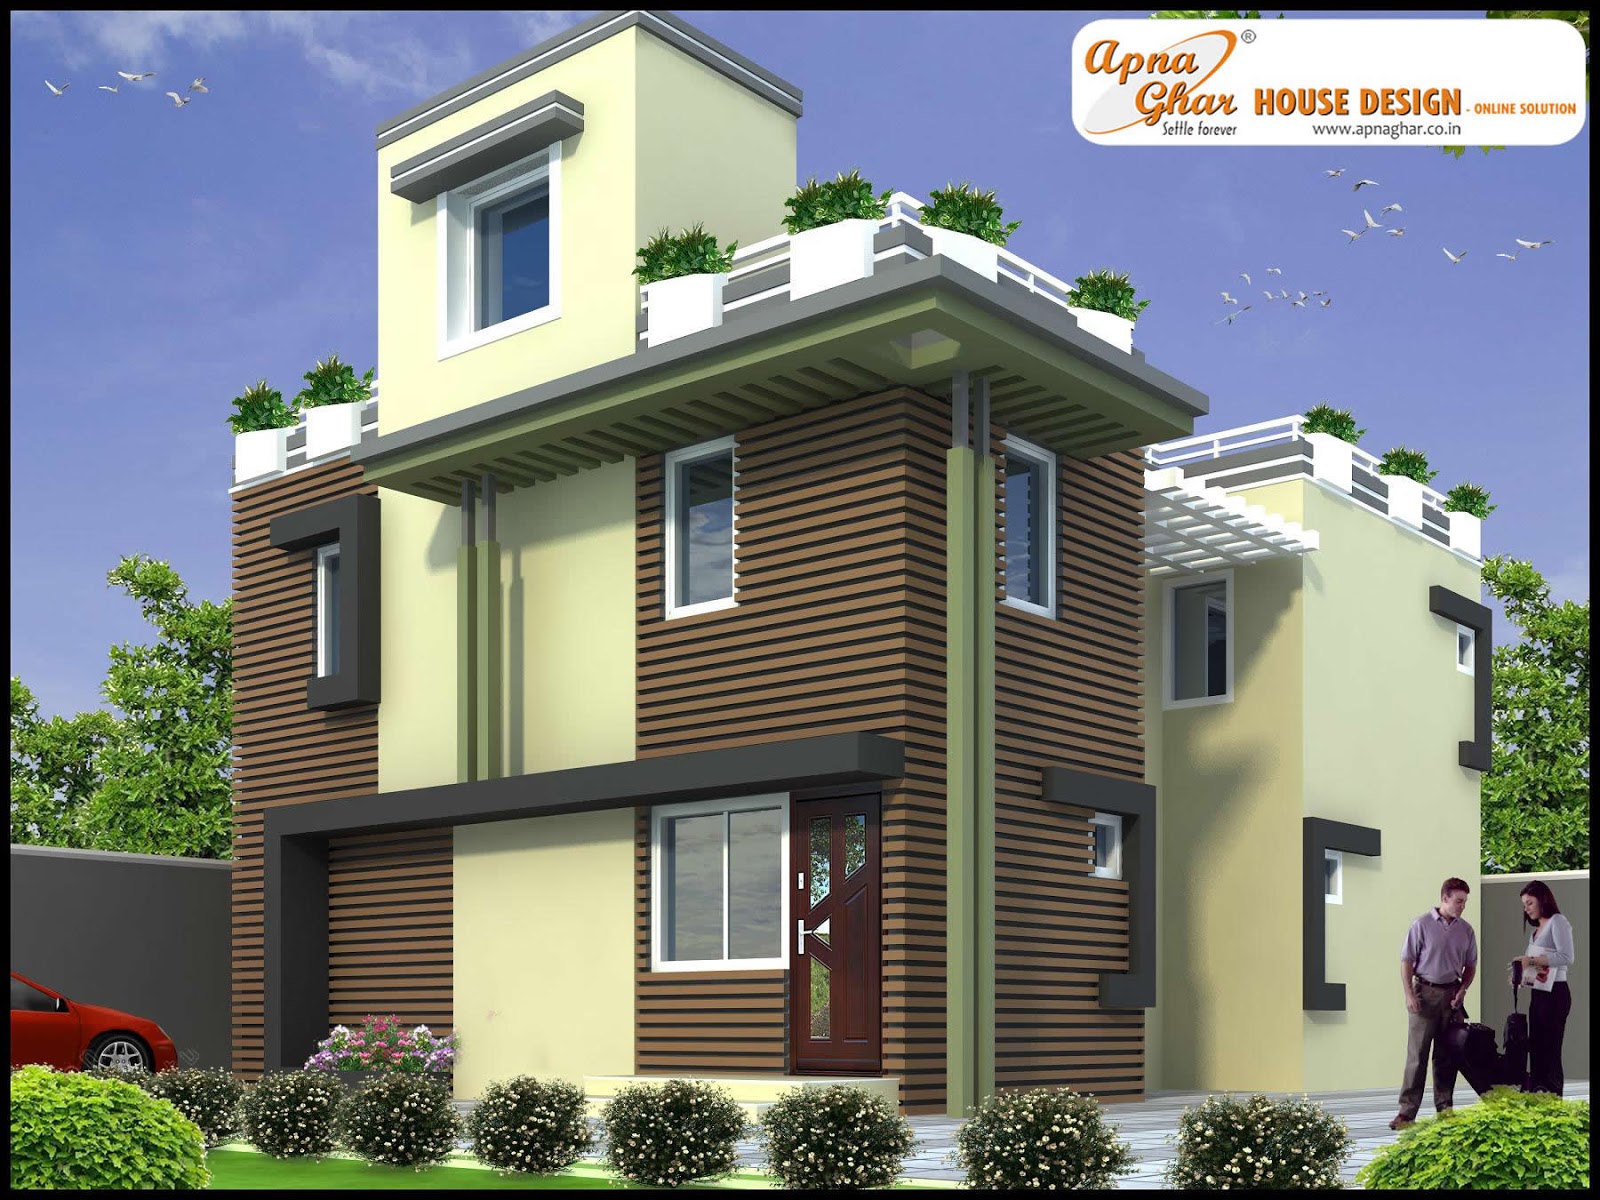 Duplex House Design Apnaghar House Design Page 2 Home